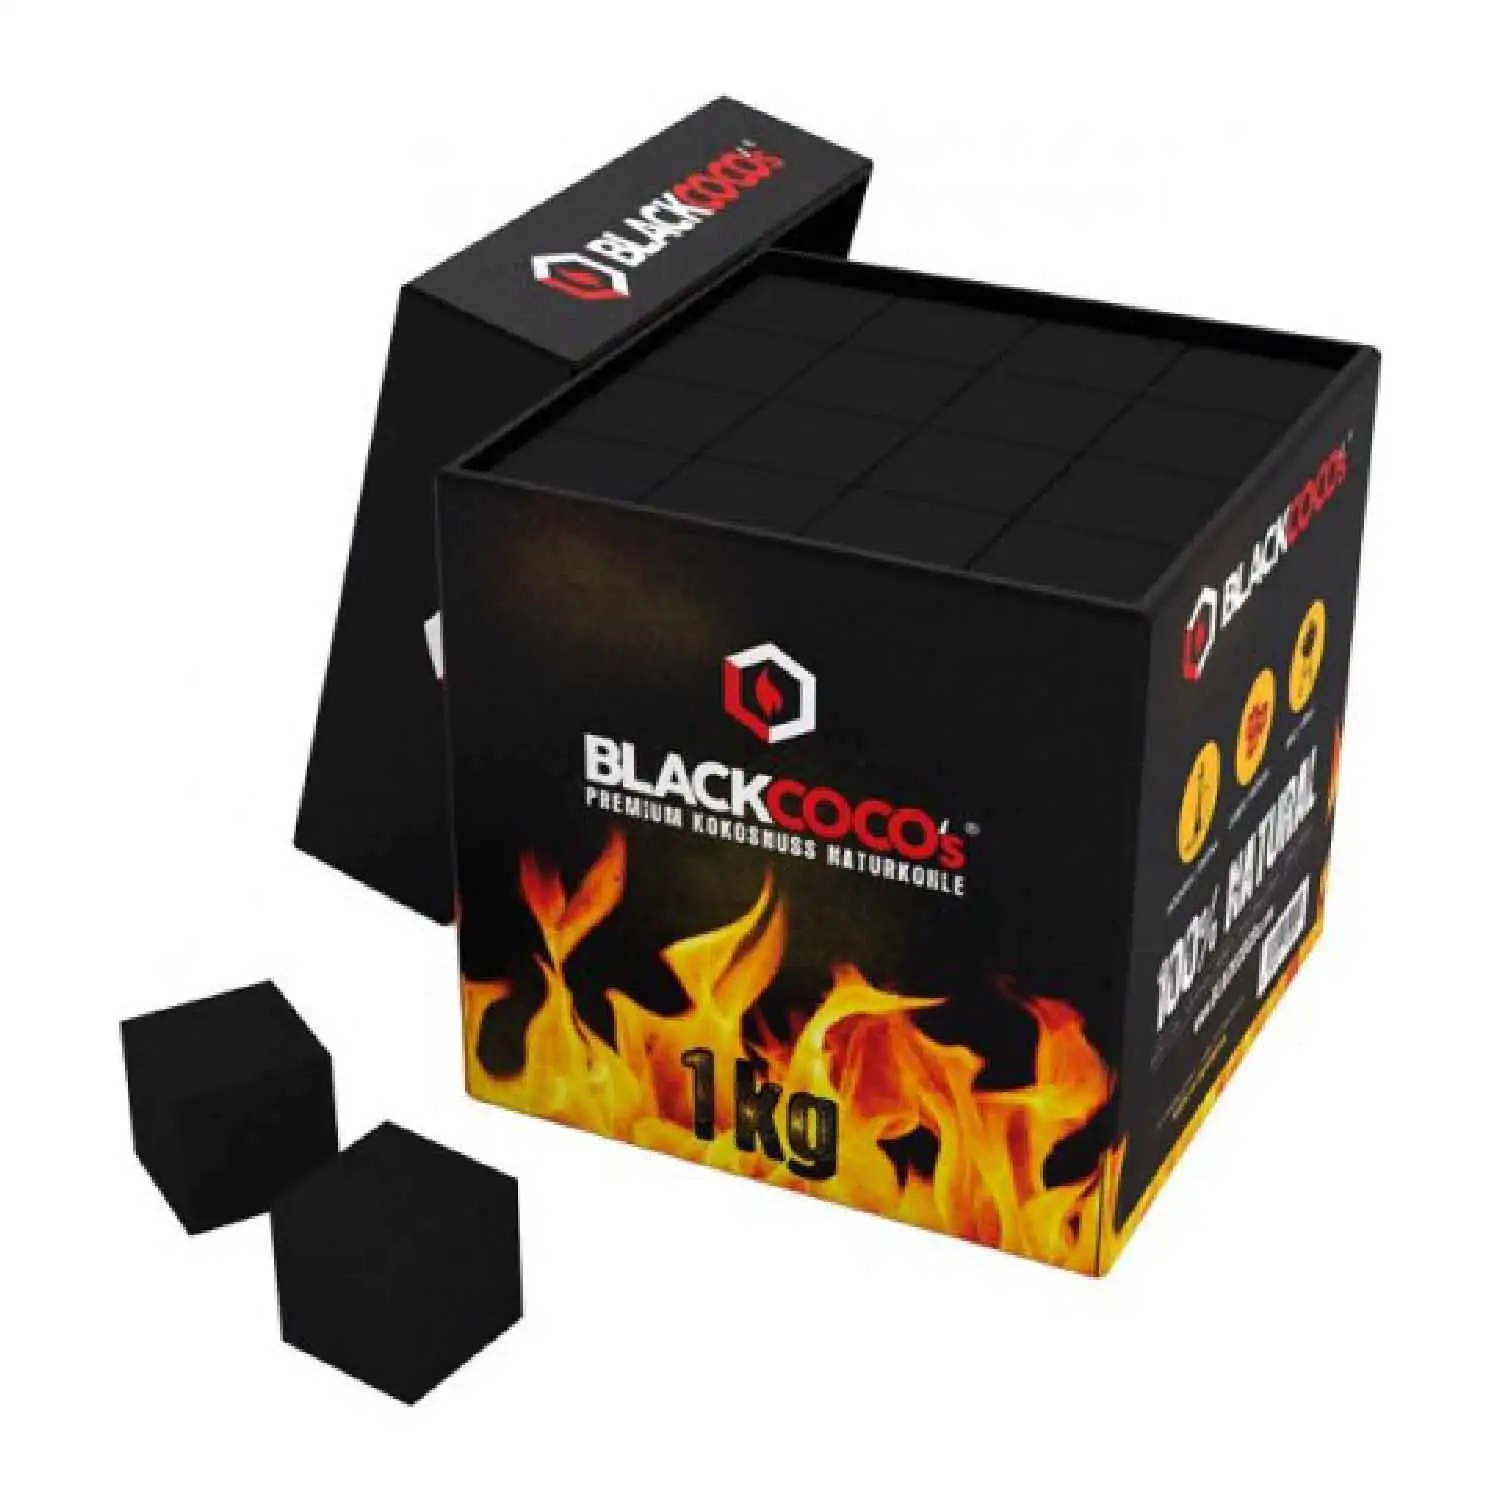 Blackcoco charbon 1kg - Buy at Real Tobacco